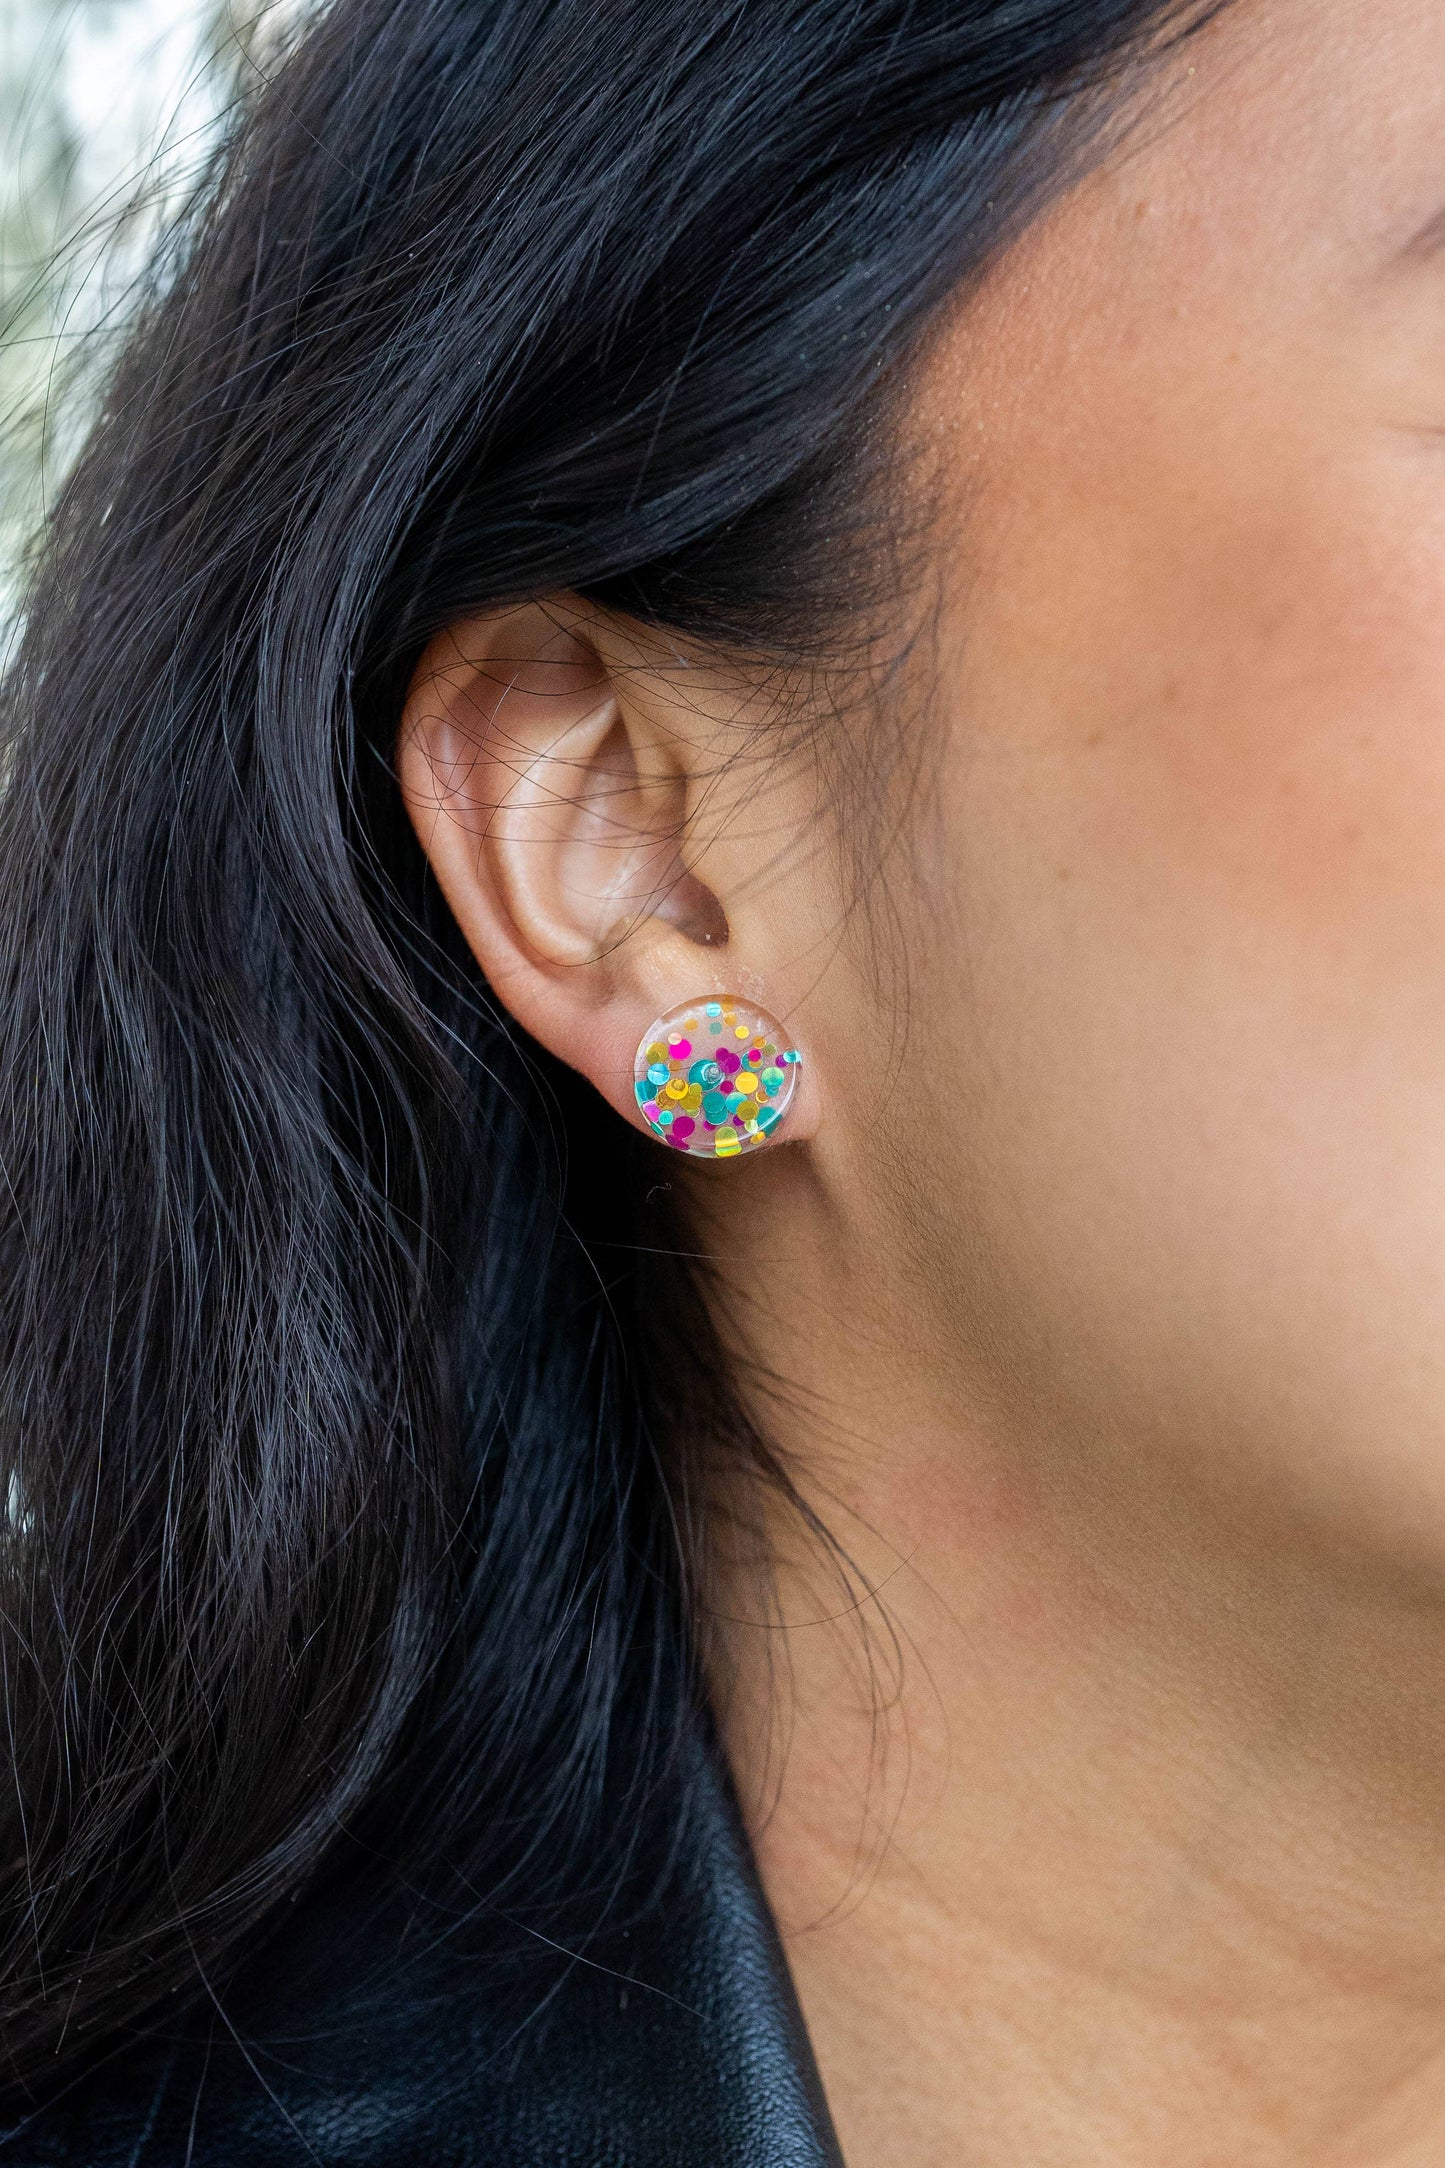 Sophie Studs - Confetti / Glitter Sparkle Sequin Earrings